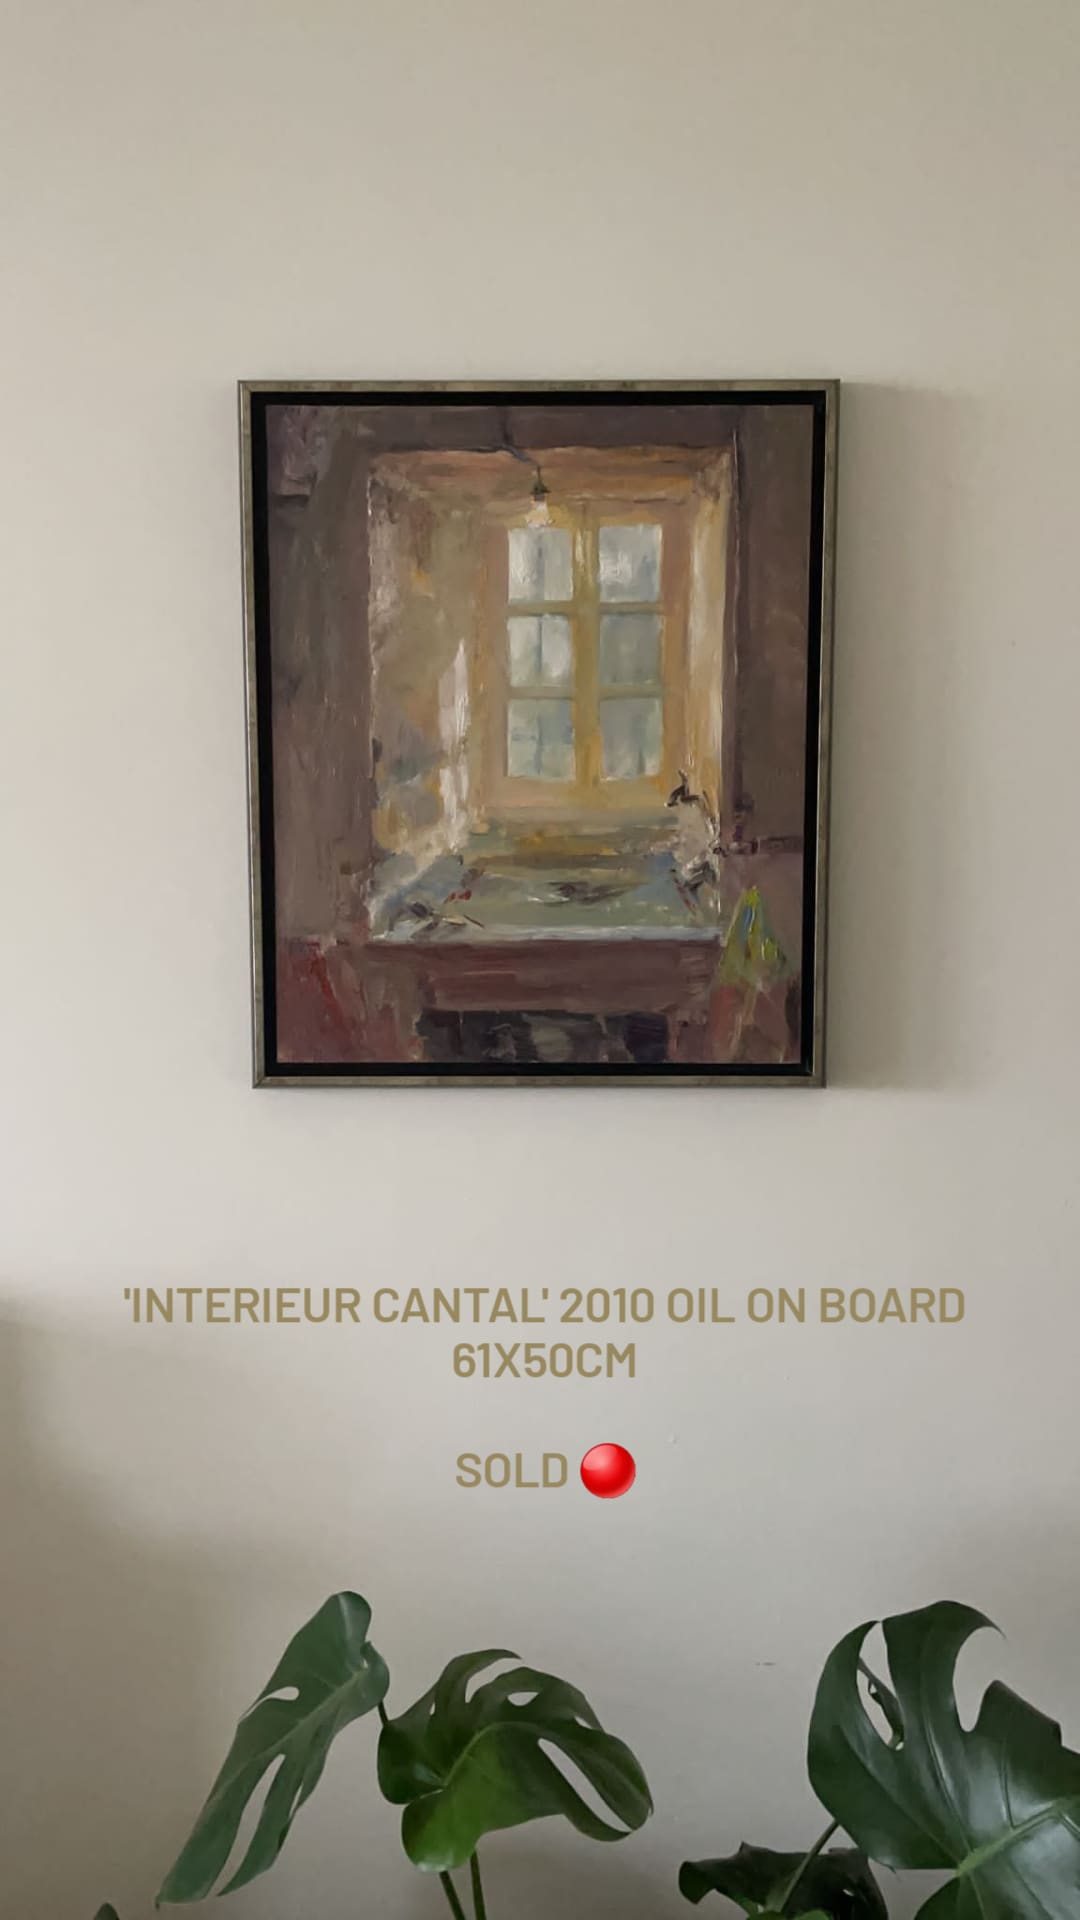 ‘Interieur Cantal’ 2010 oil on board 61x50cm